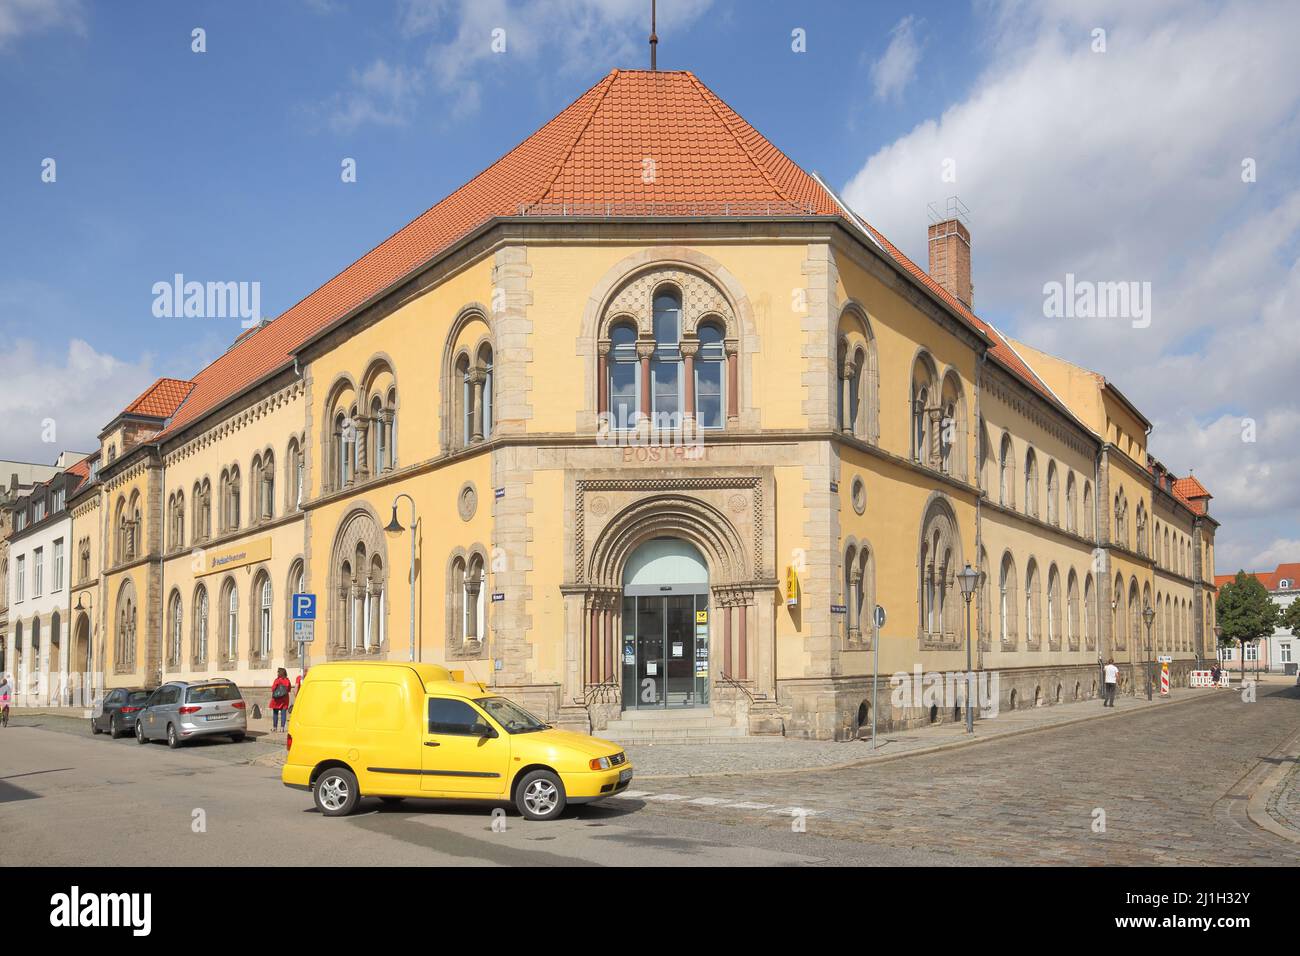 Neoromanische Hauptpostamt in Halberstadt, Sachsen-Anhalt, Deutschland Stockfoto